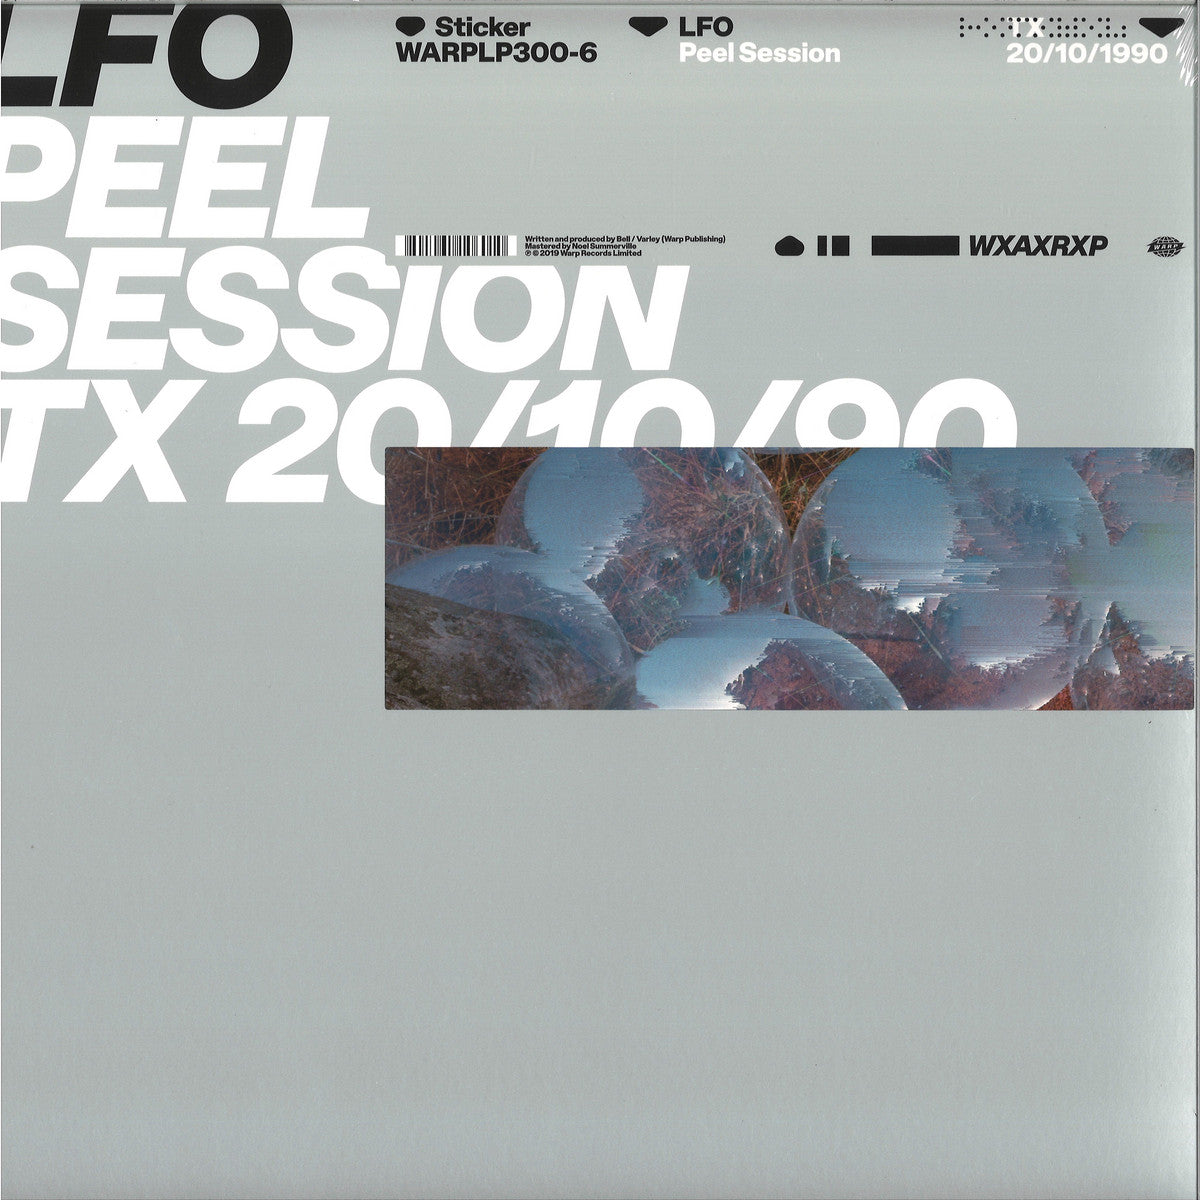 LFO 'PEEL SESSION TX 20/10/90' 12"